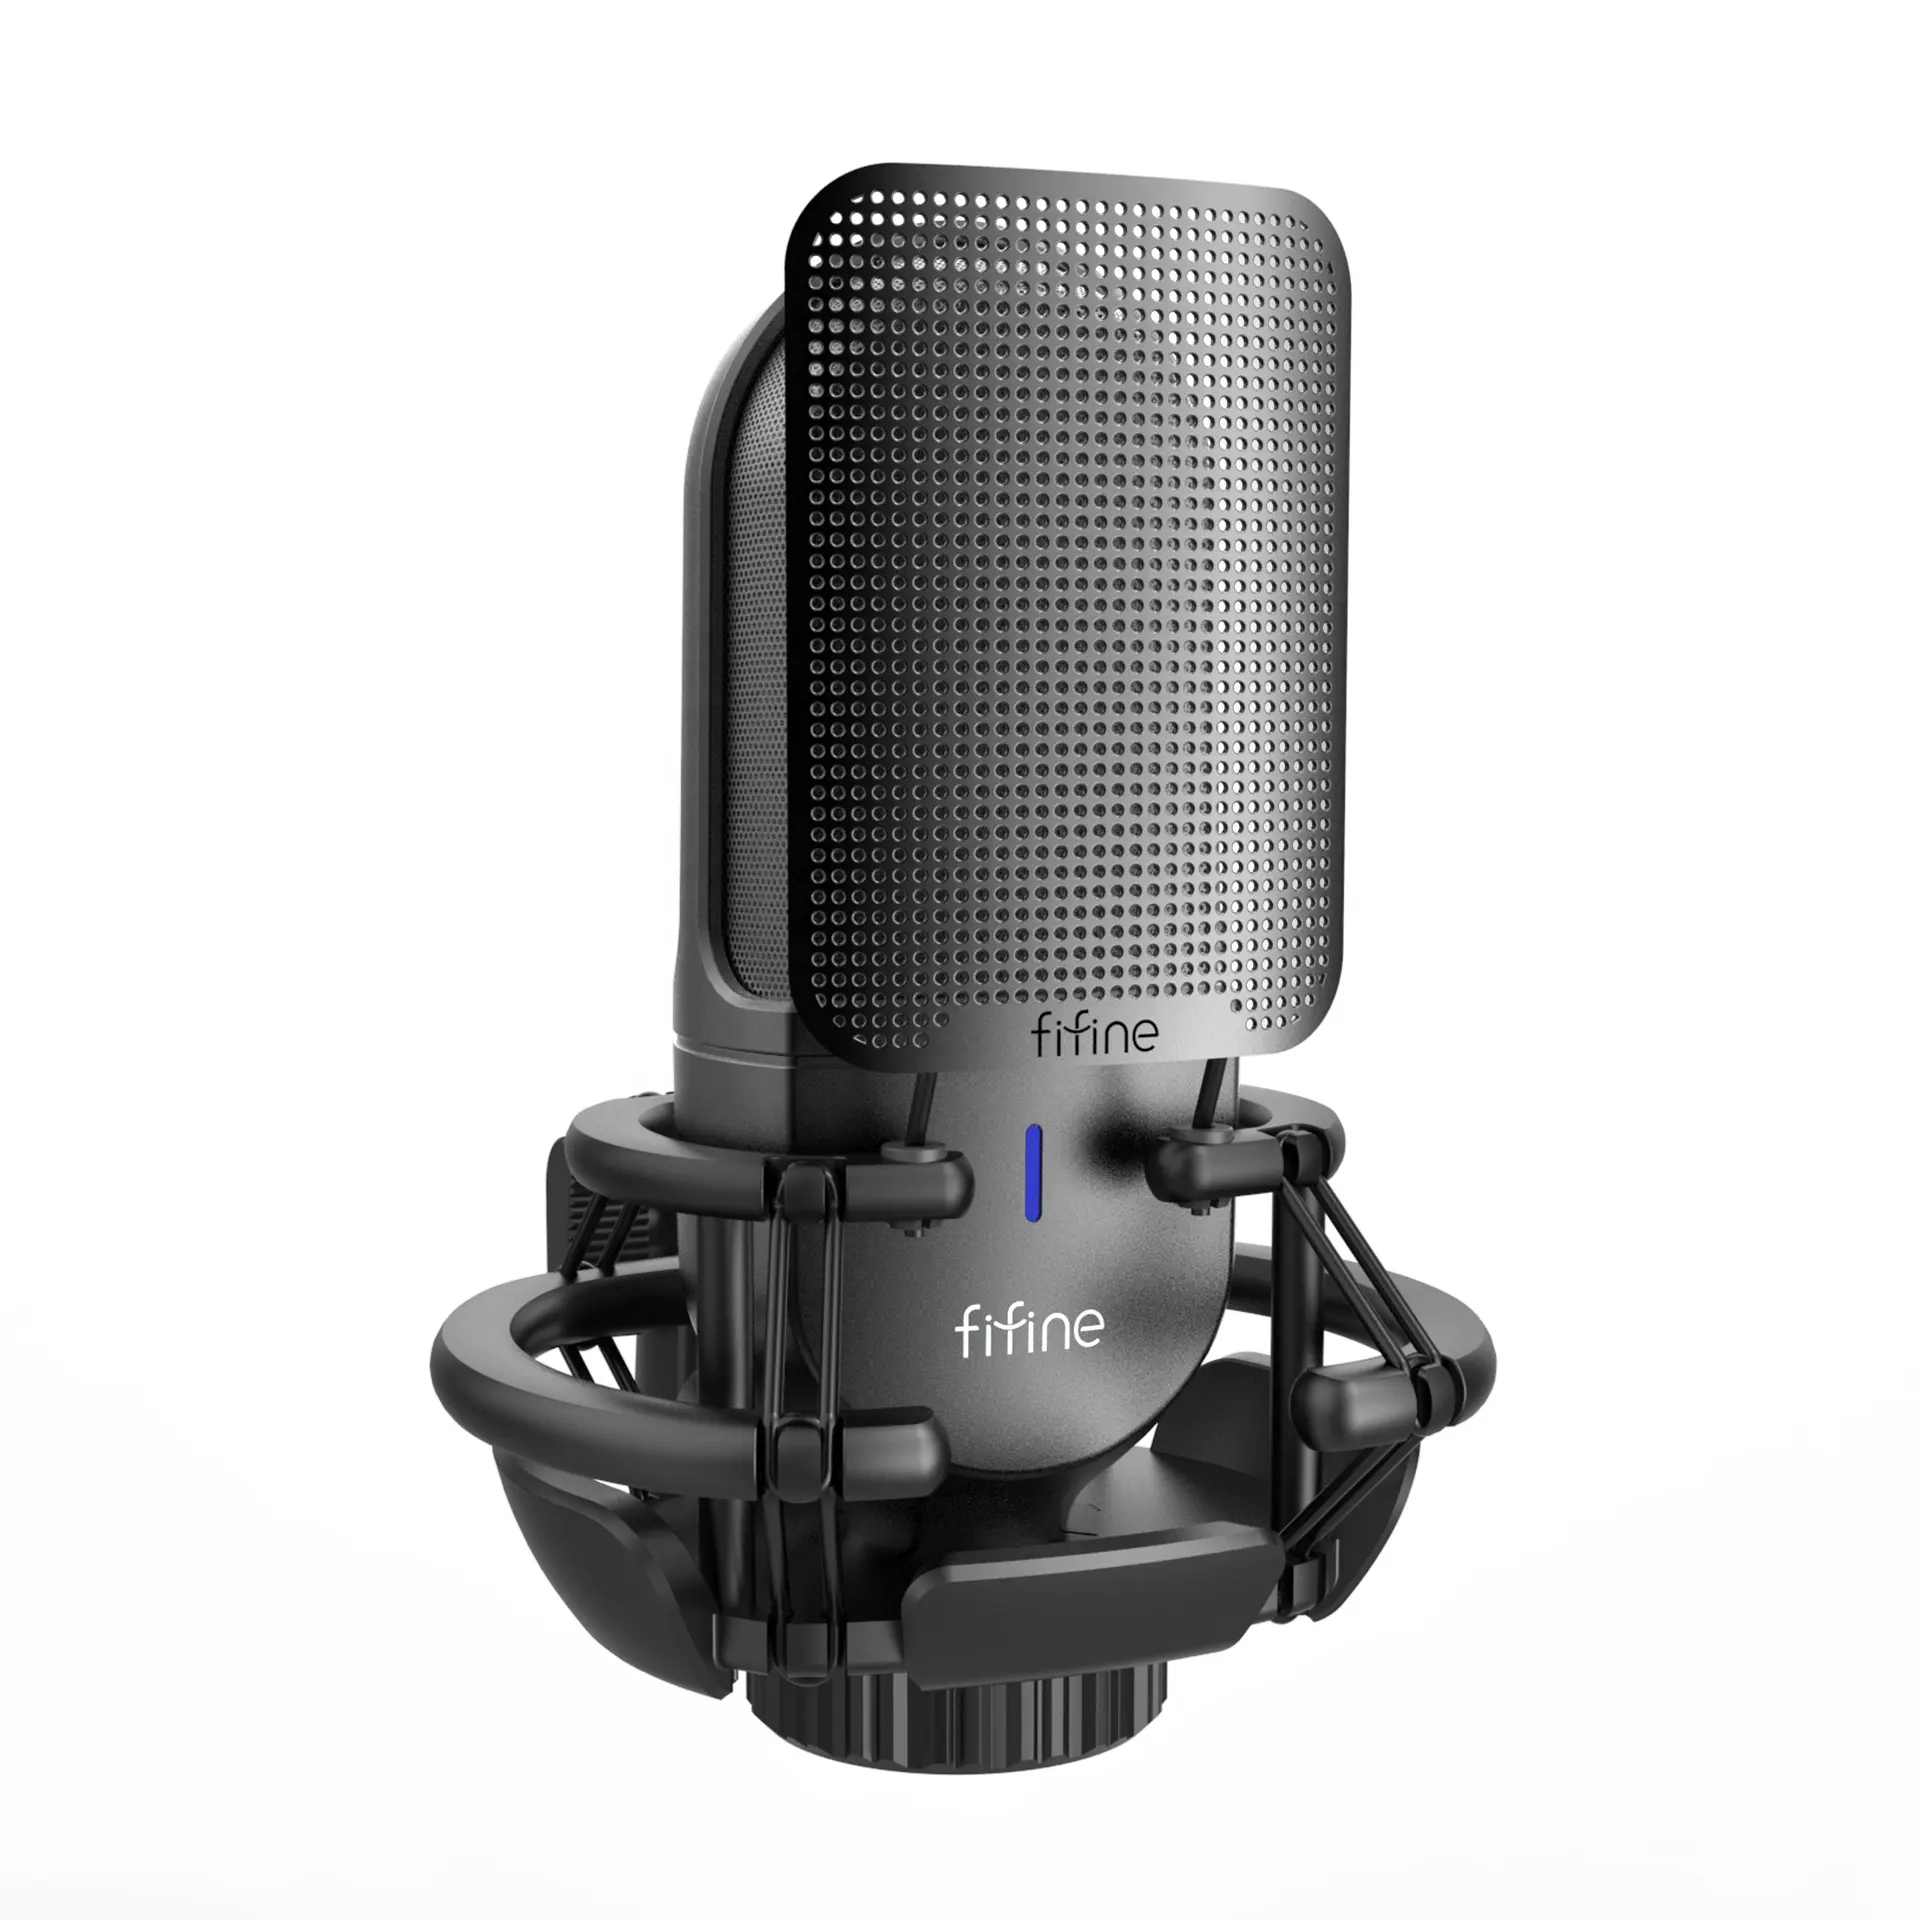 Fifine yeni Model K720 Usb kondenser mikrofon mikrofon masaüstü stüdyo kayıt profesyonel oyun mikrofon